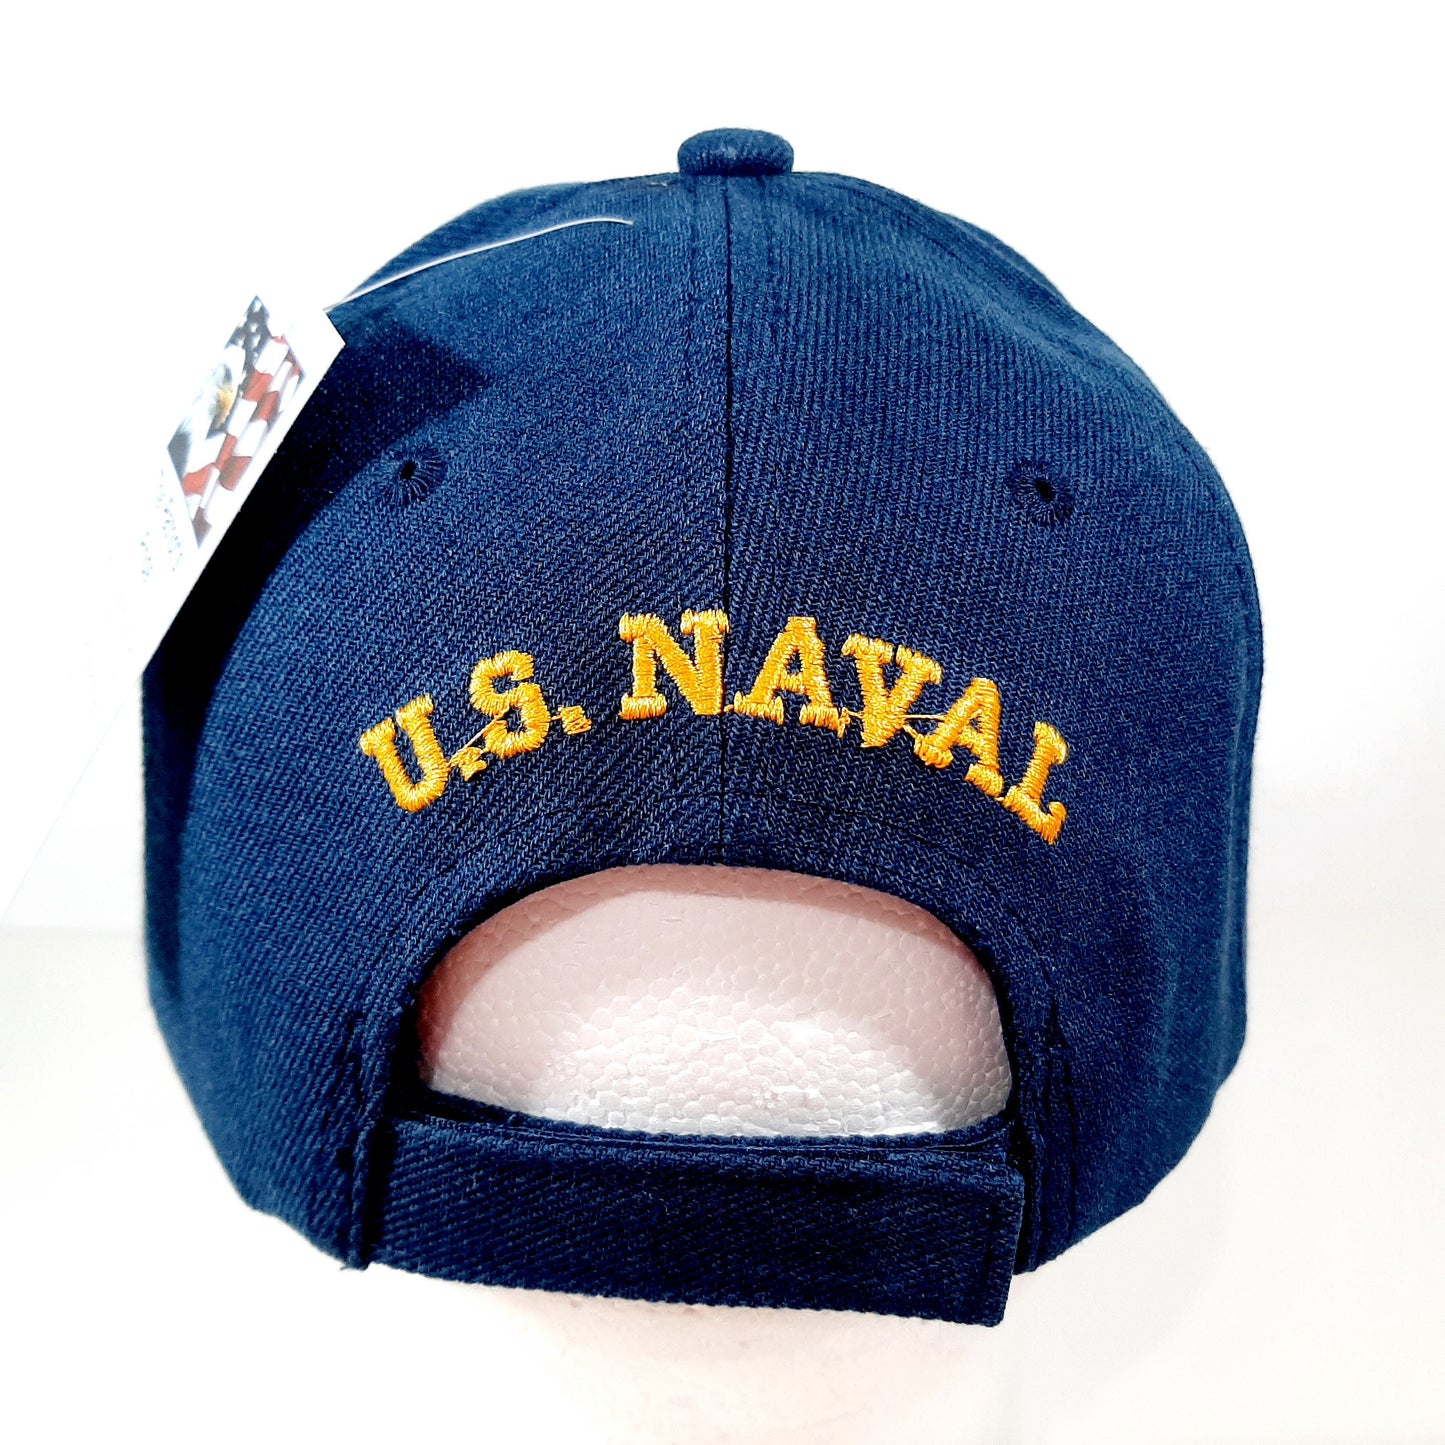 Naval Aviation Mens Baseball Cap Hat Navy Blue Embroidered